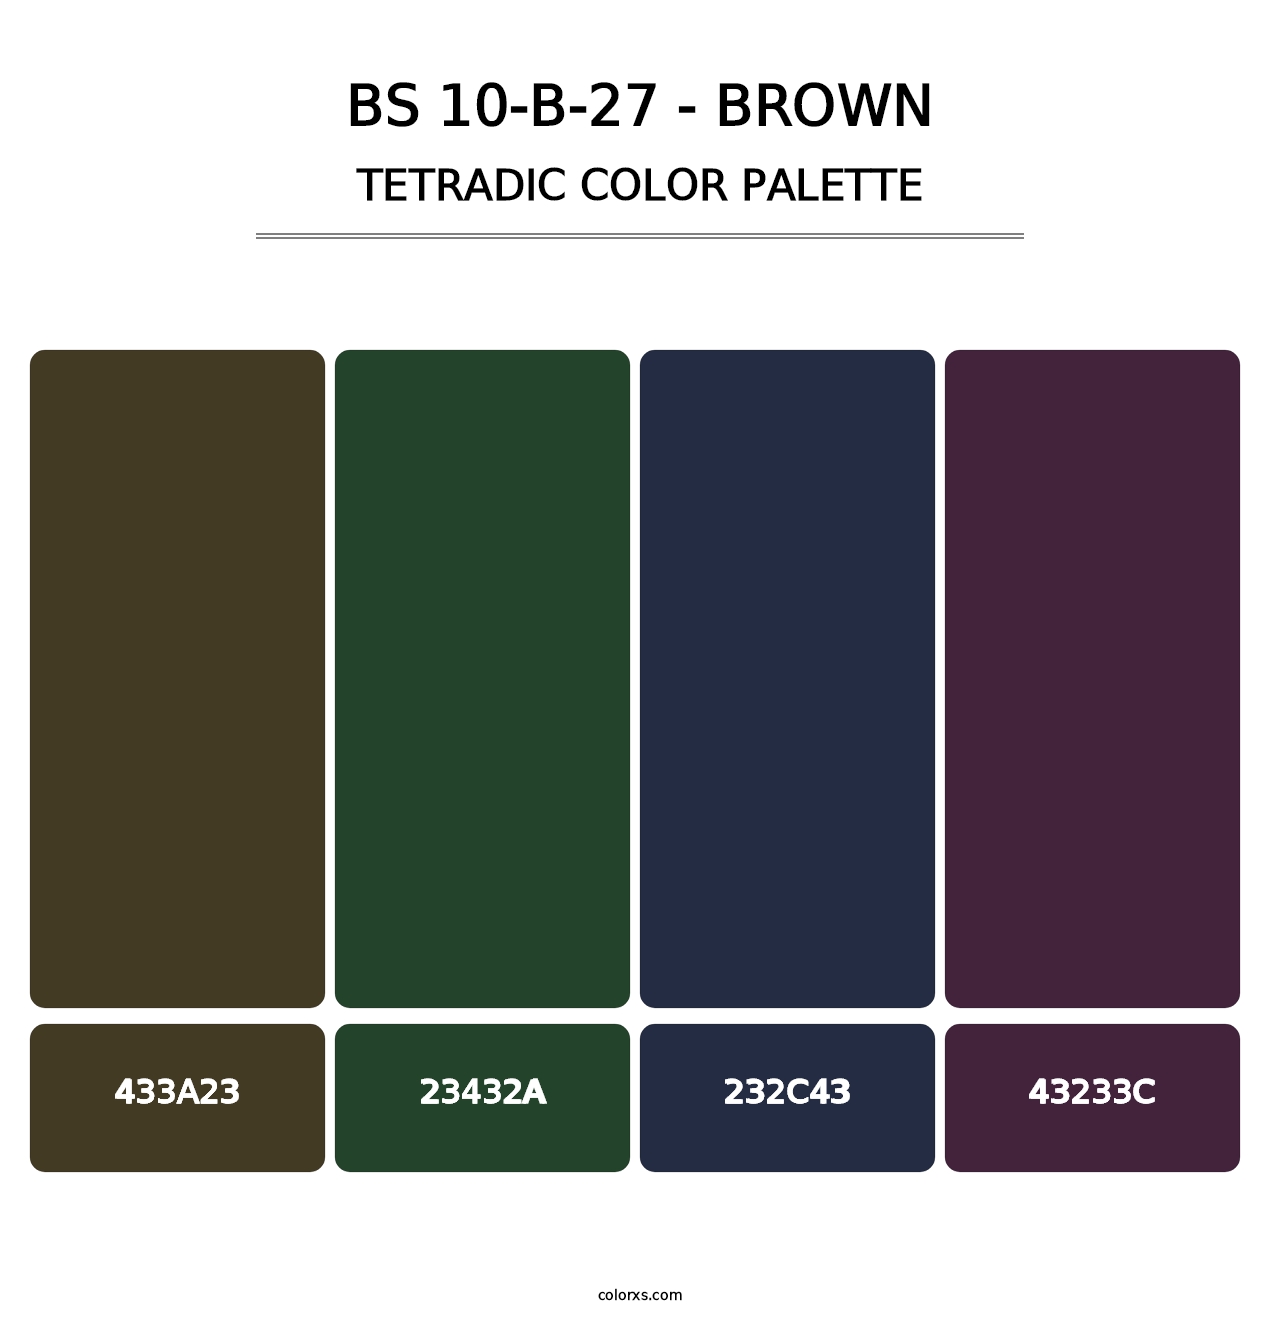 BS 10-B-27 - Brown - Tetradic Color Palette